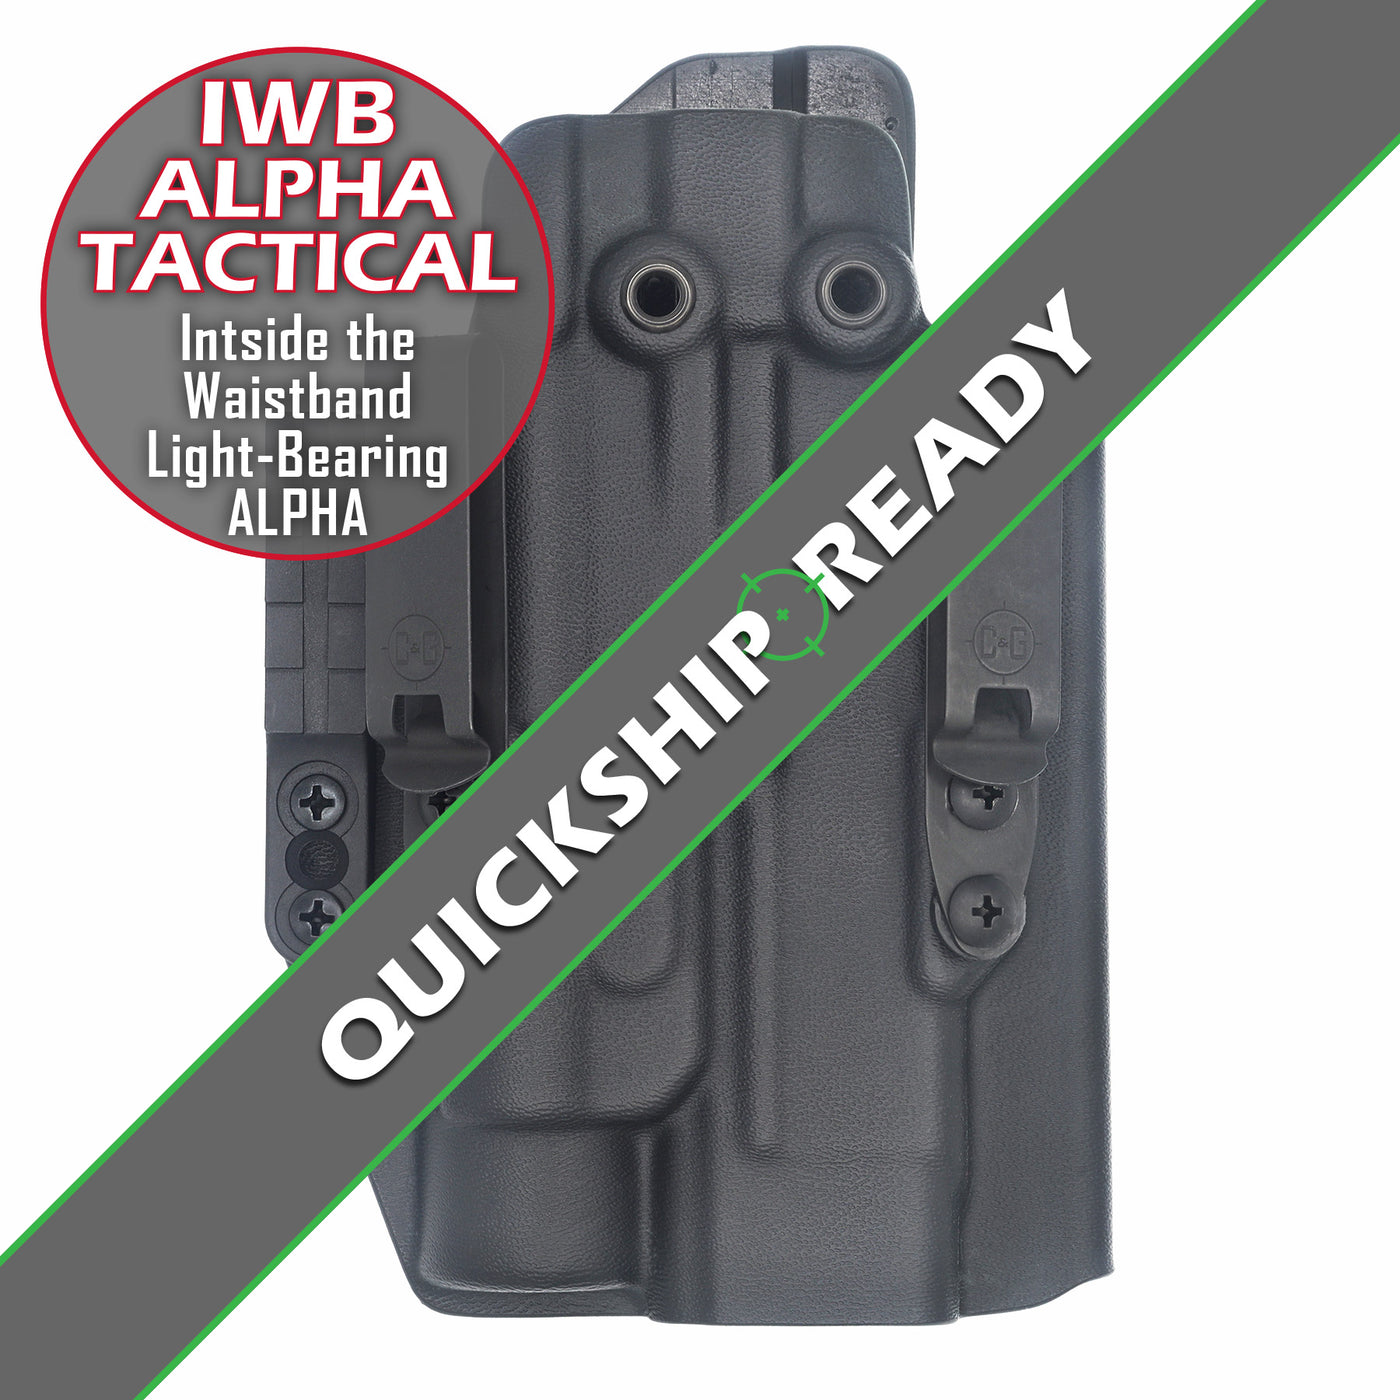 C&G Holsters Quickship IWB ALPHA Tactical (Light-Bearing) Holster